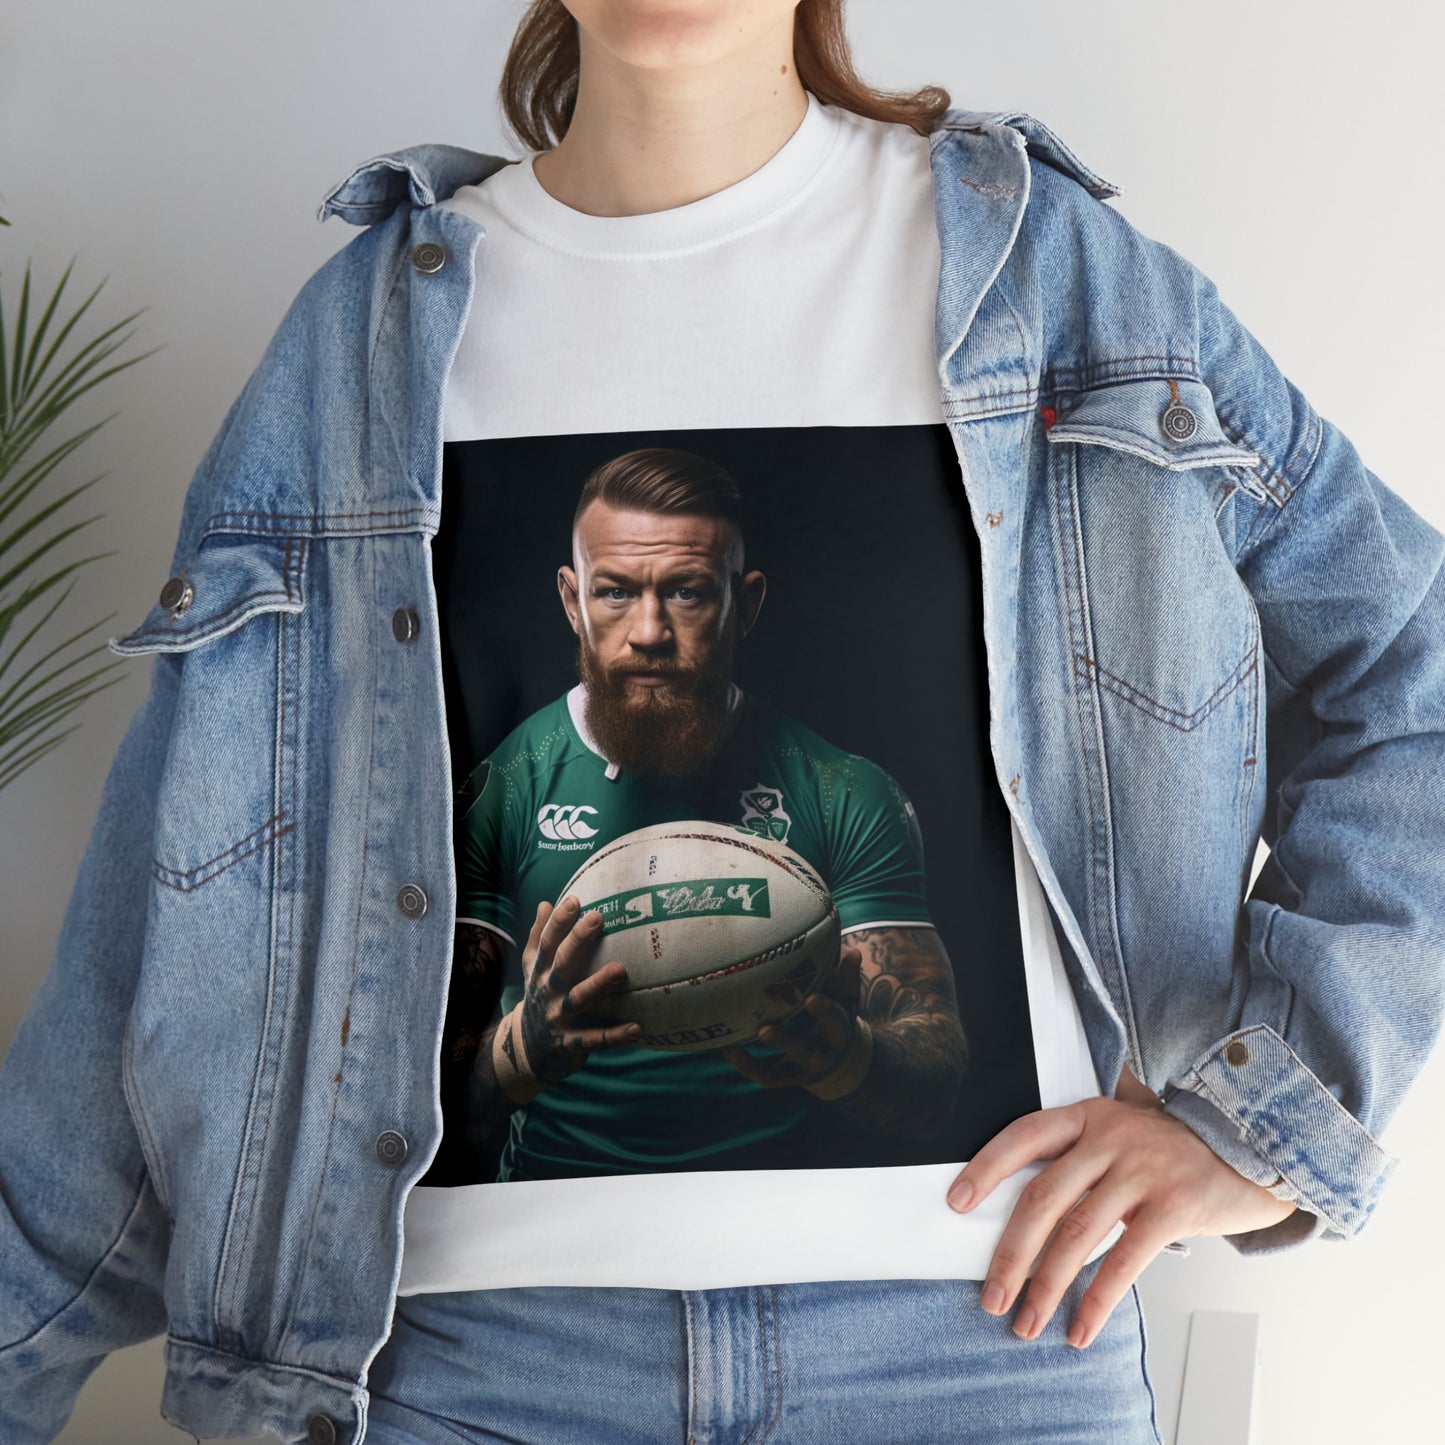 Serious Conor - light shirts